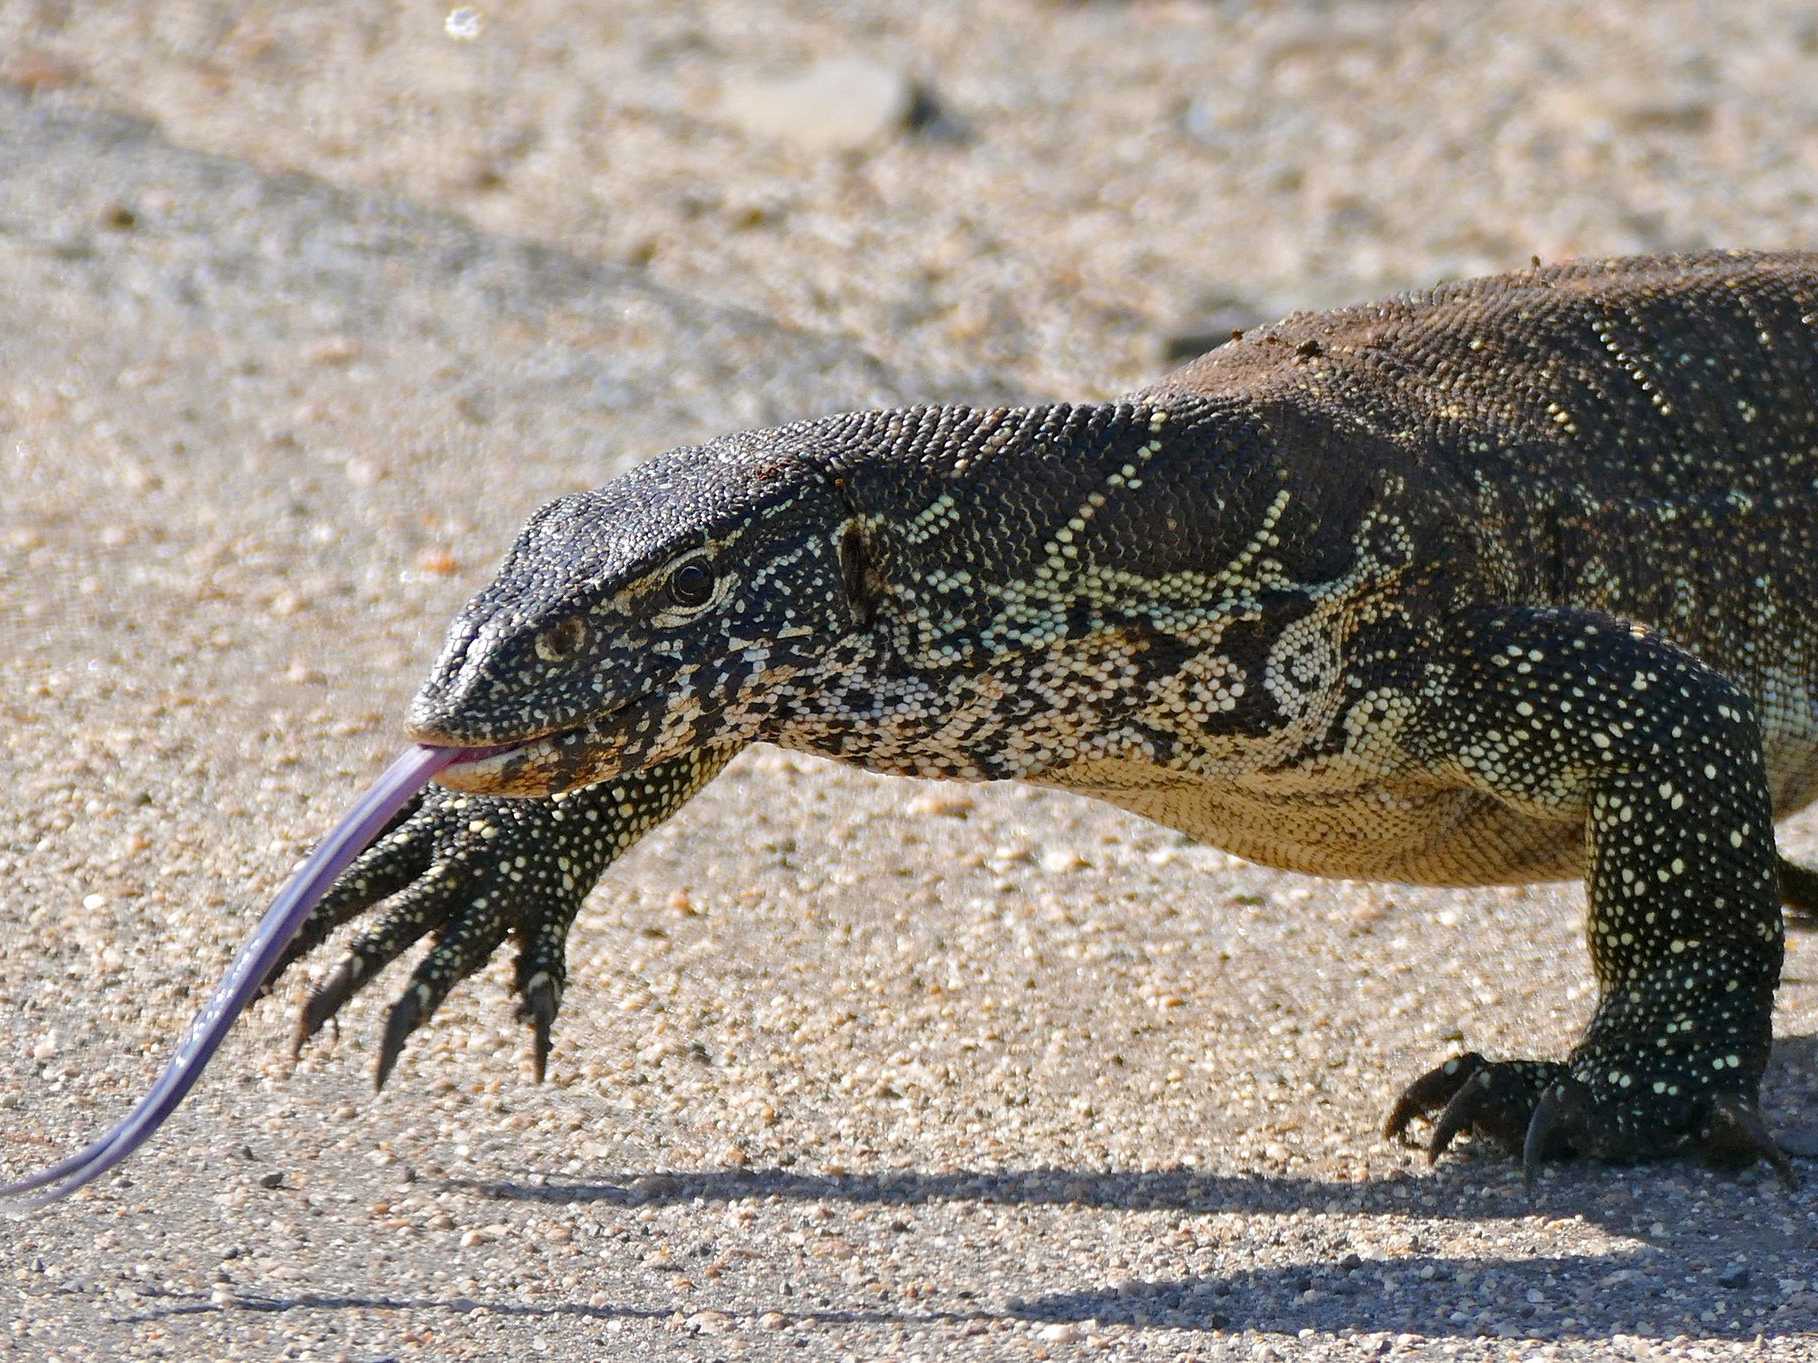 Nile Monitor Lizards invading Florida - Business Insider